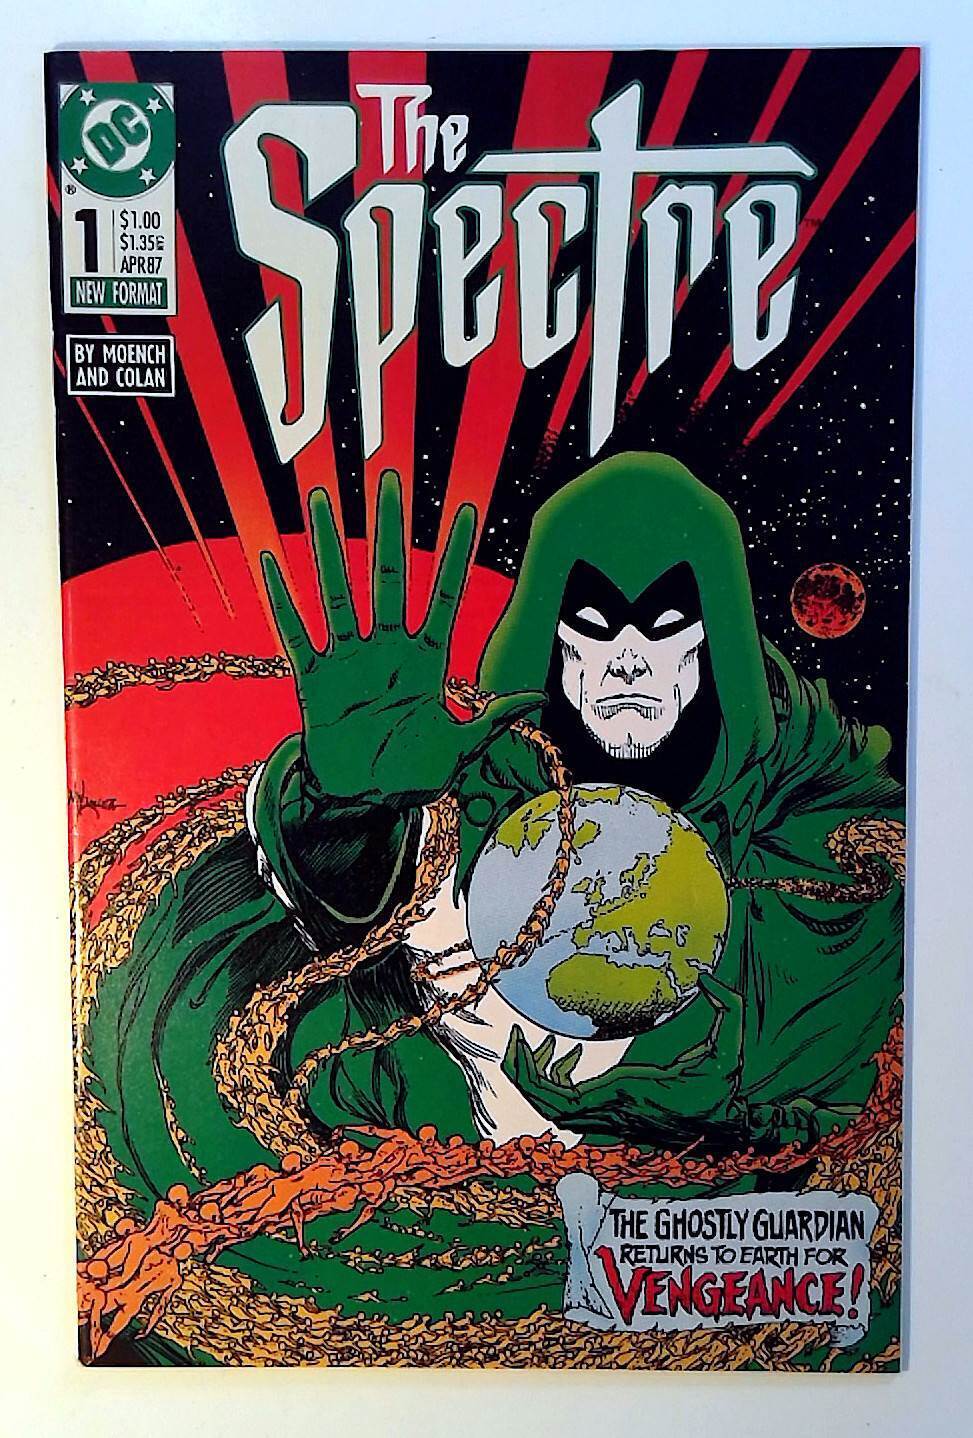 The Spectre #1 DC Comics (1987) VF/NM 2nd Series 1st Print Comic Book